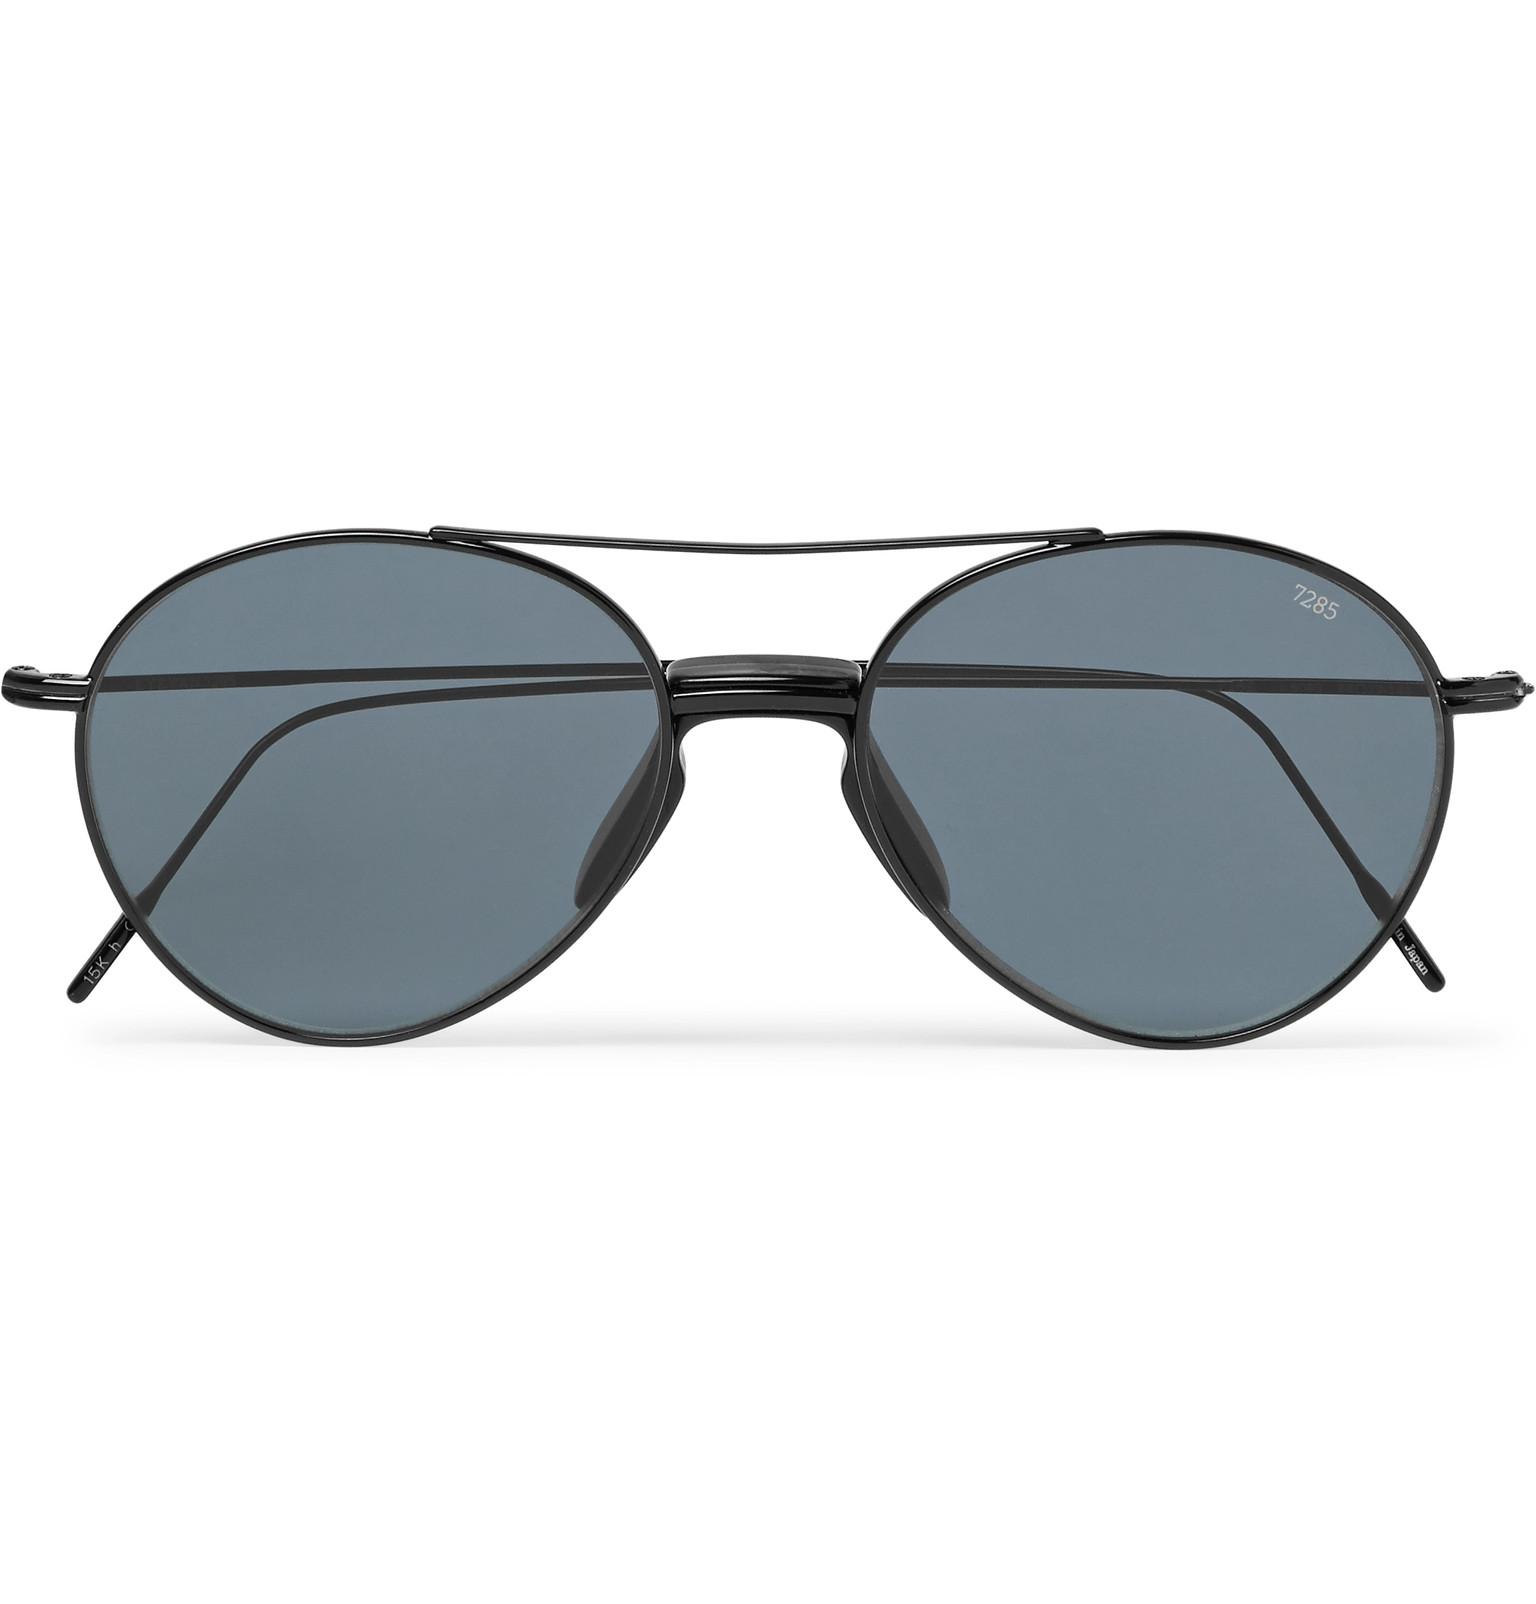 Eyevan 7285 Aviator-style Metal Sunglasses in Gray for Men - Lyst